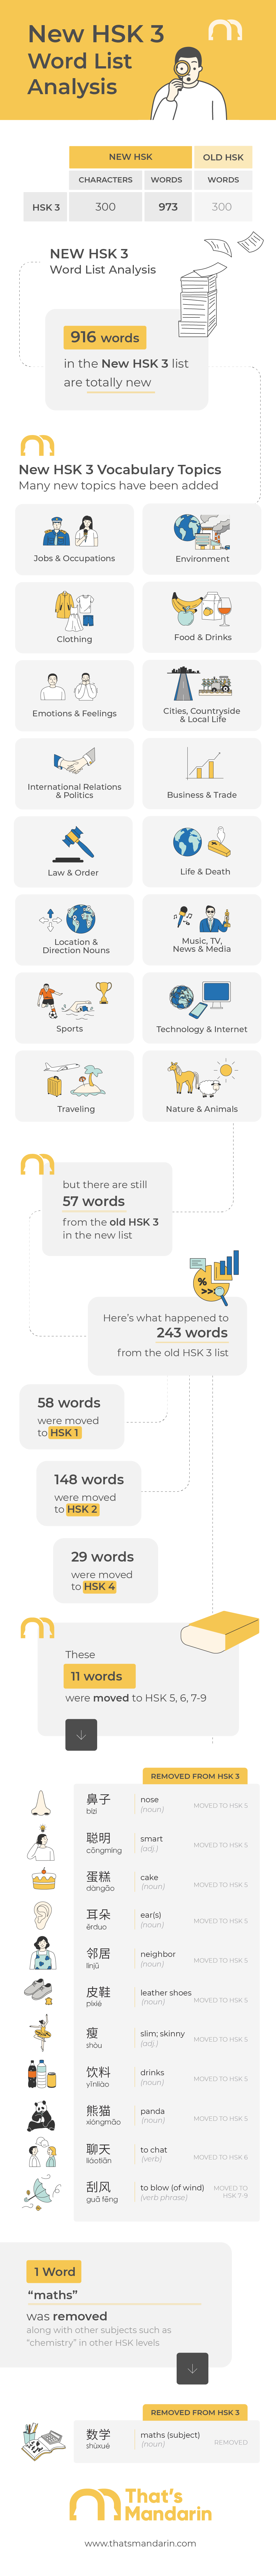 New HSK3 Word List Infographic & Analysis 2021 | That's Mandarin Chinese Language School